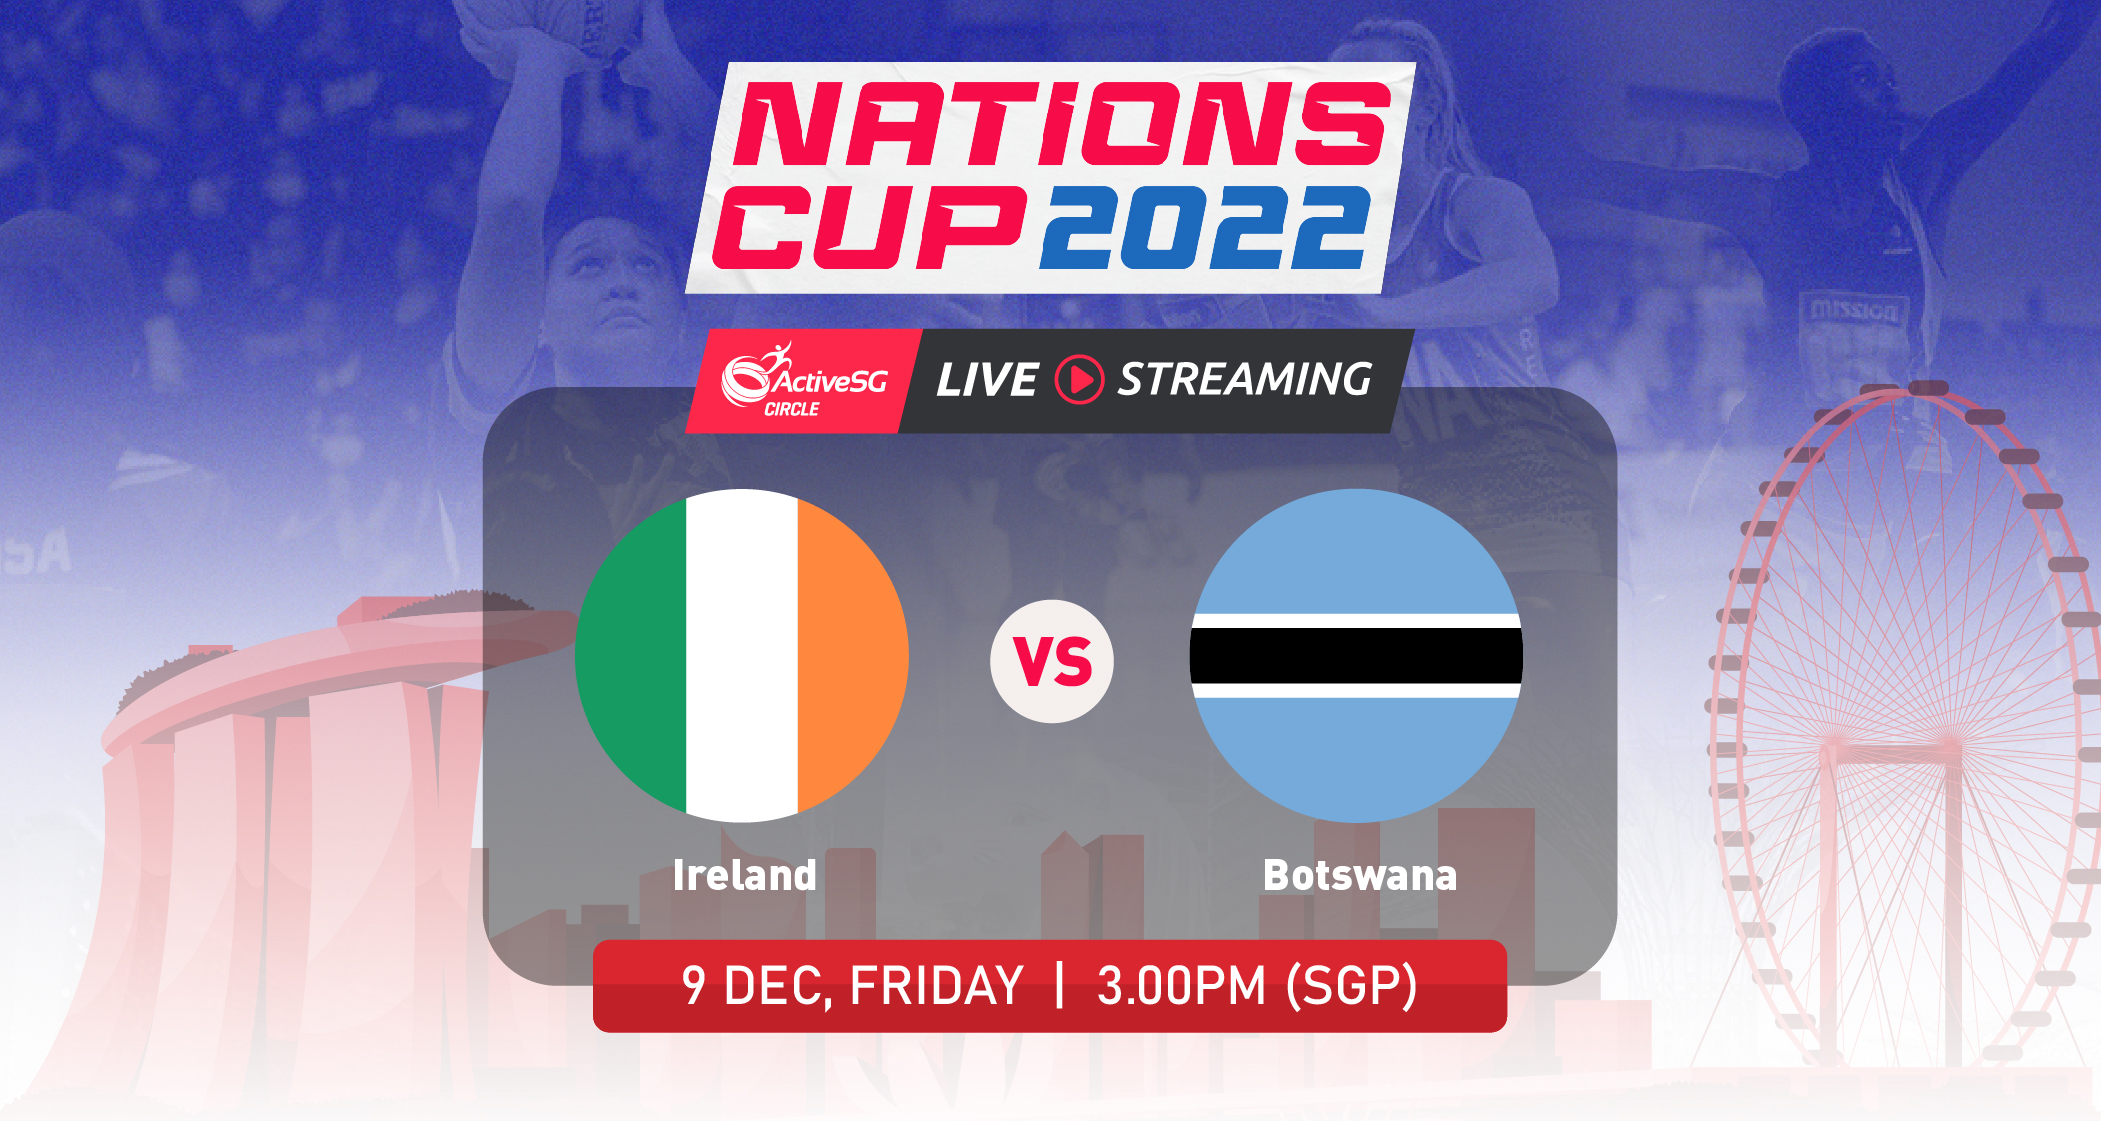 Ireland 🇮🇪 vs 🇧🇼 Botswana | Nations Cup 2022